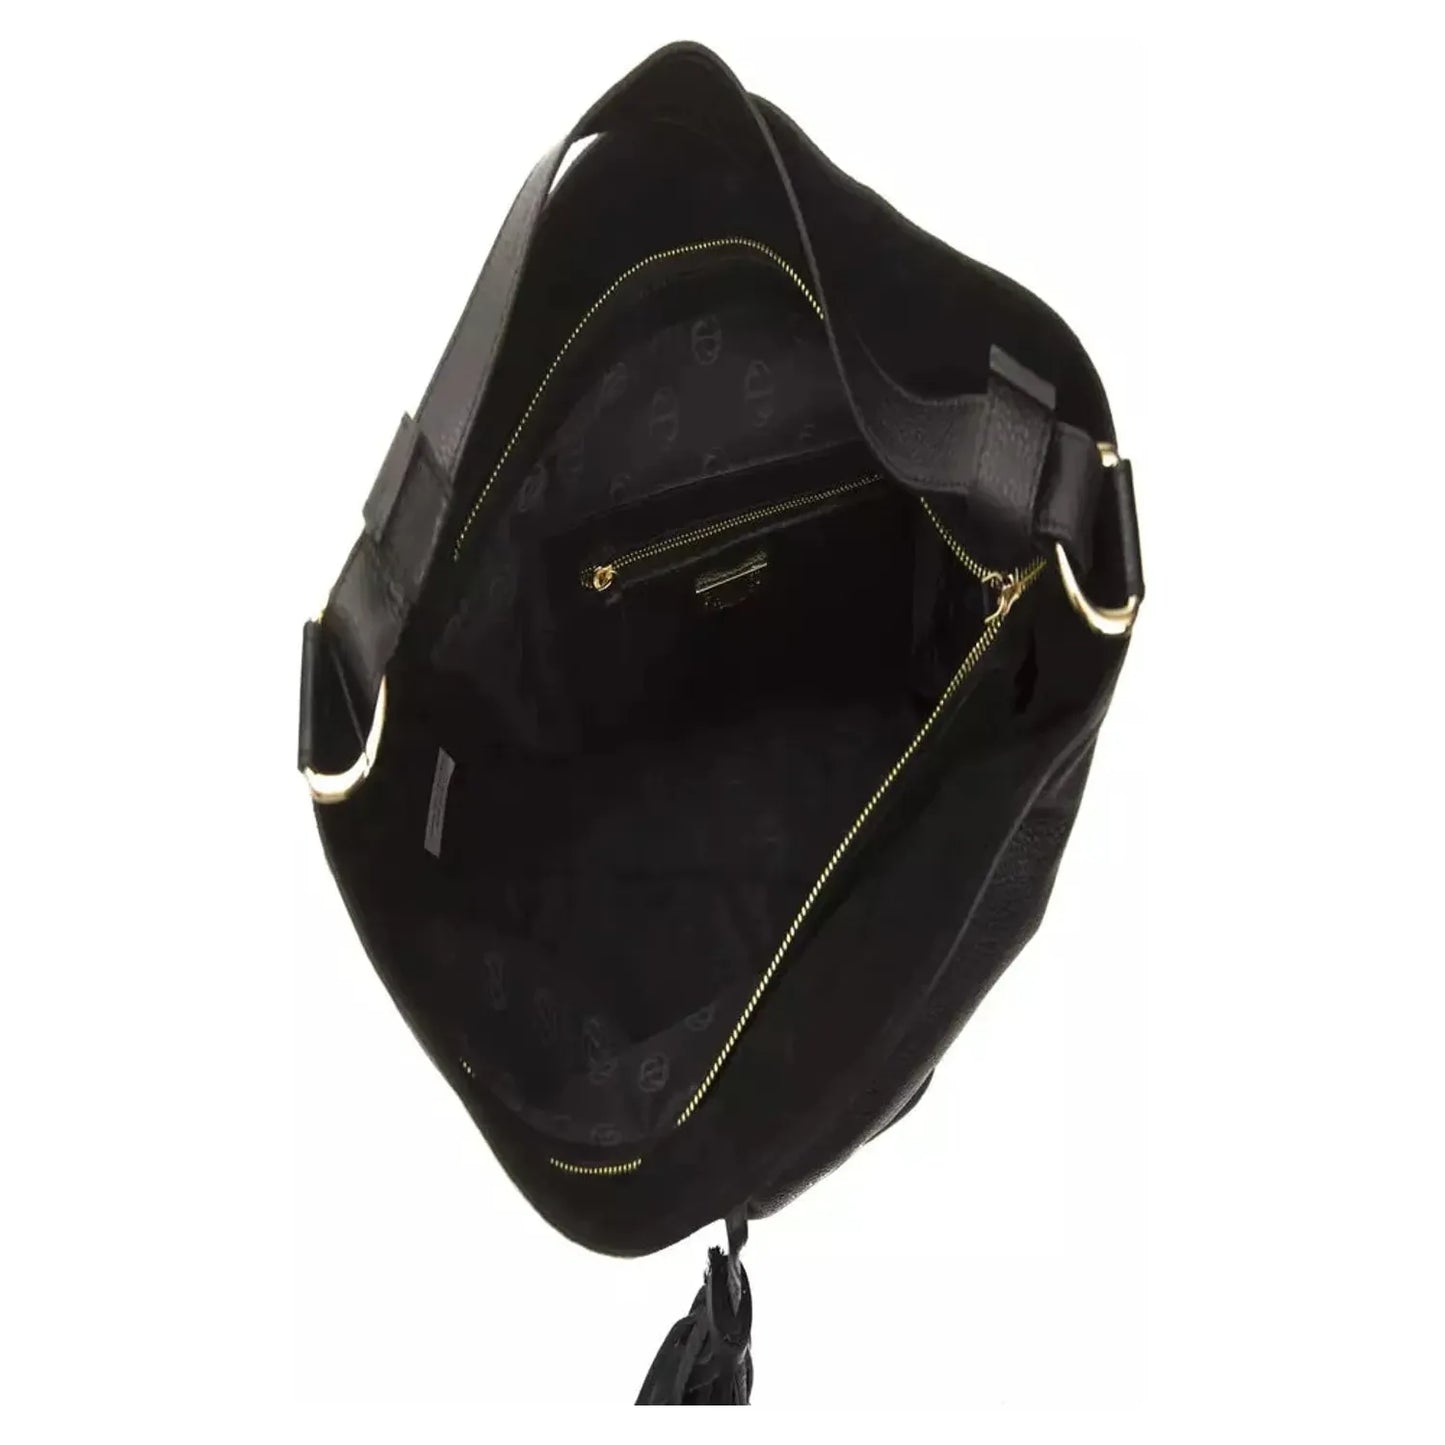 Pompei DonatellaElegant Leather Shoulder Bag in Timeless BlackMcRichard Designer Brands£159.00